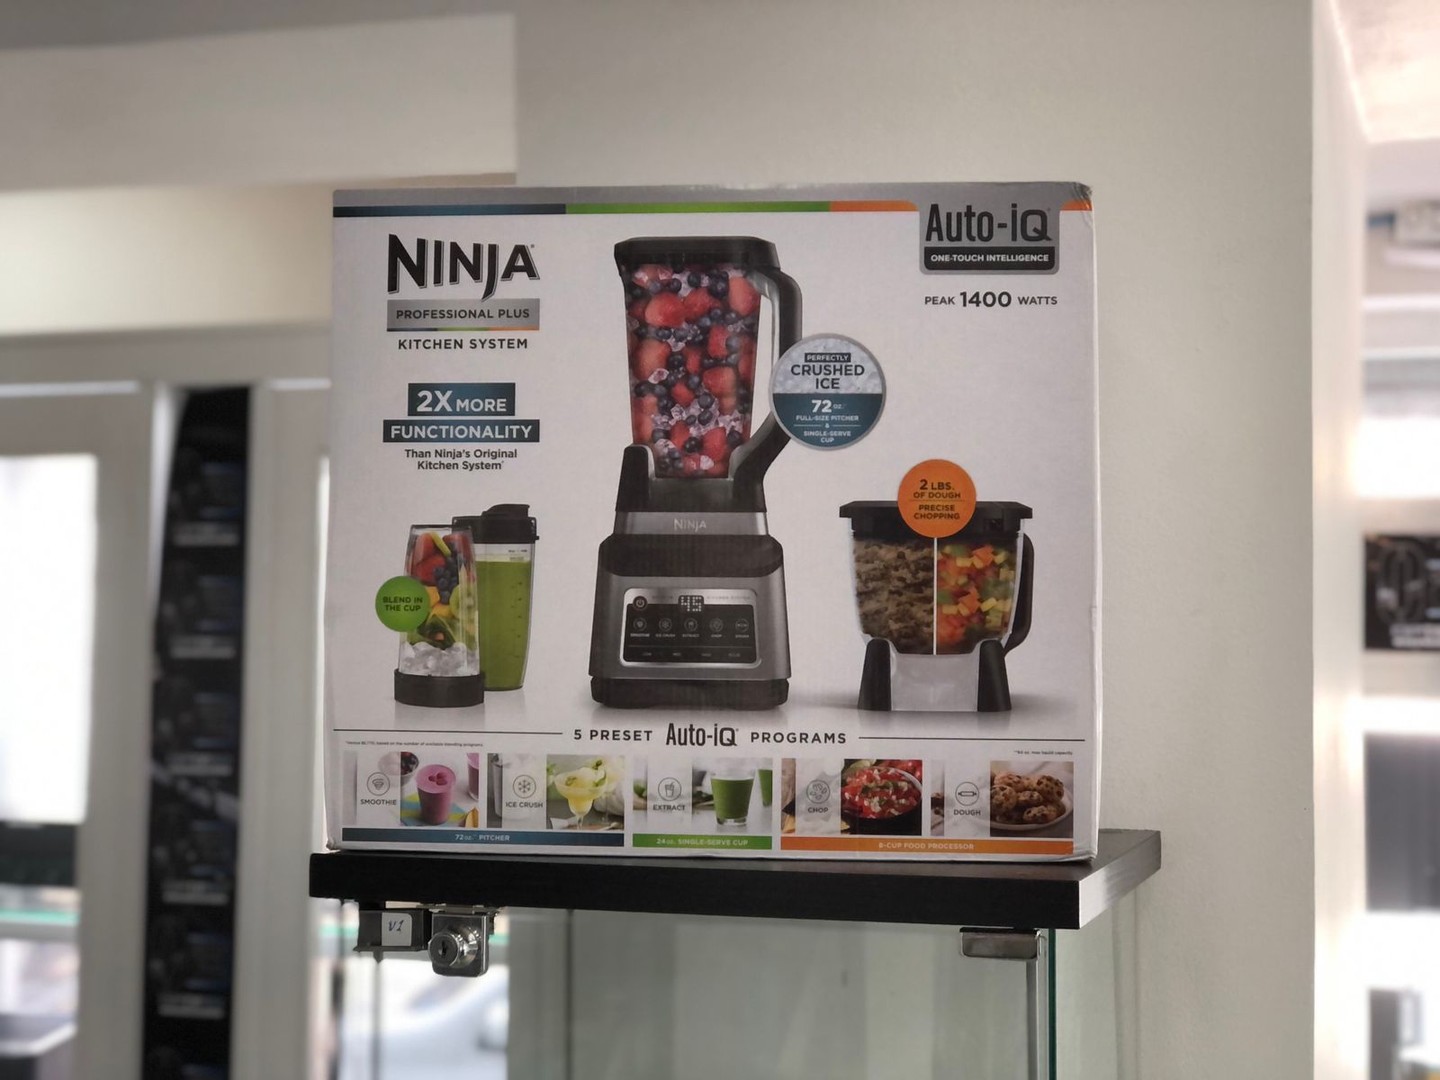 electrodomesticos - Licuadora Ninja Profesional Pluz Kit Completo Auto-iQ 1400Watts